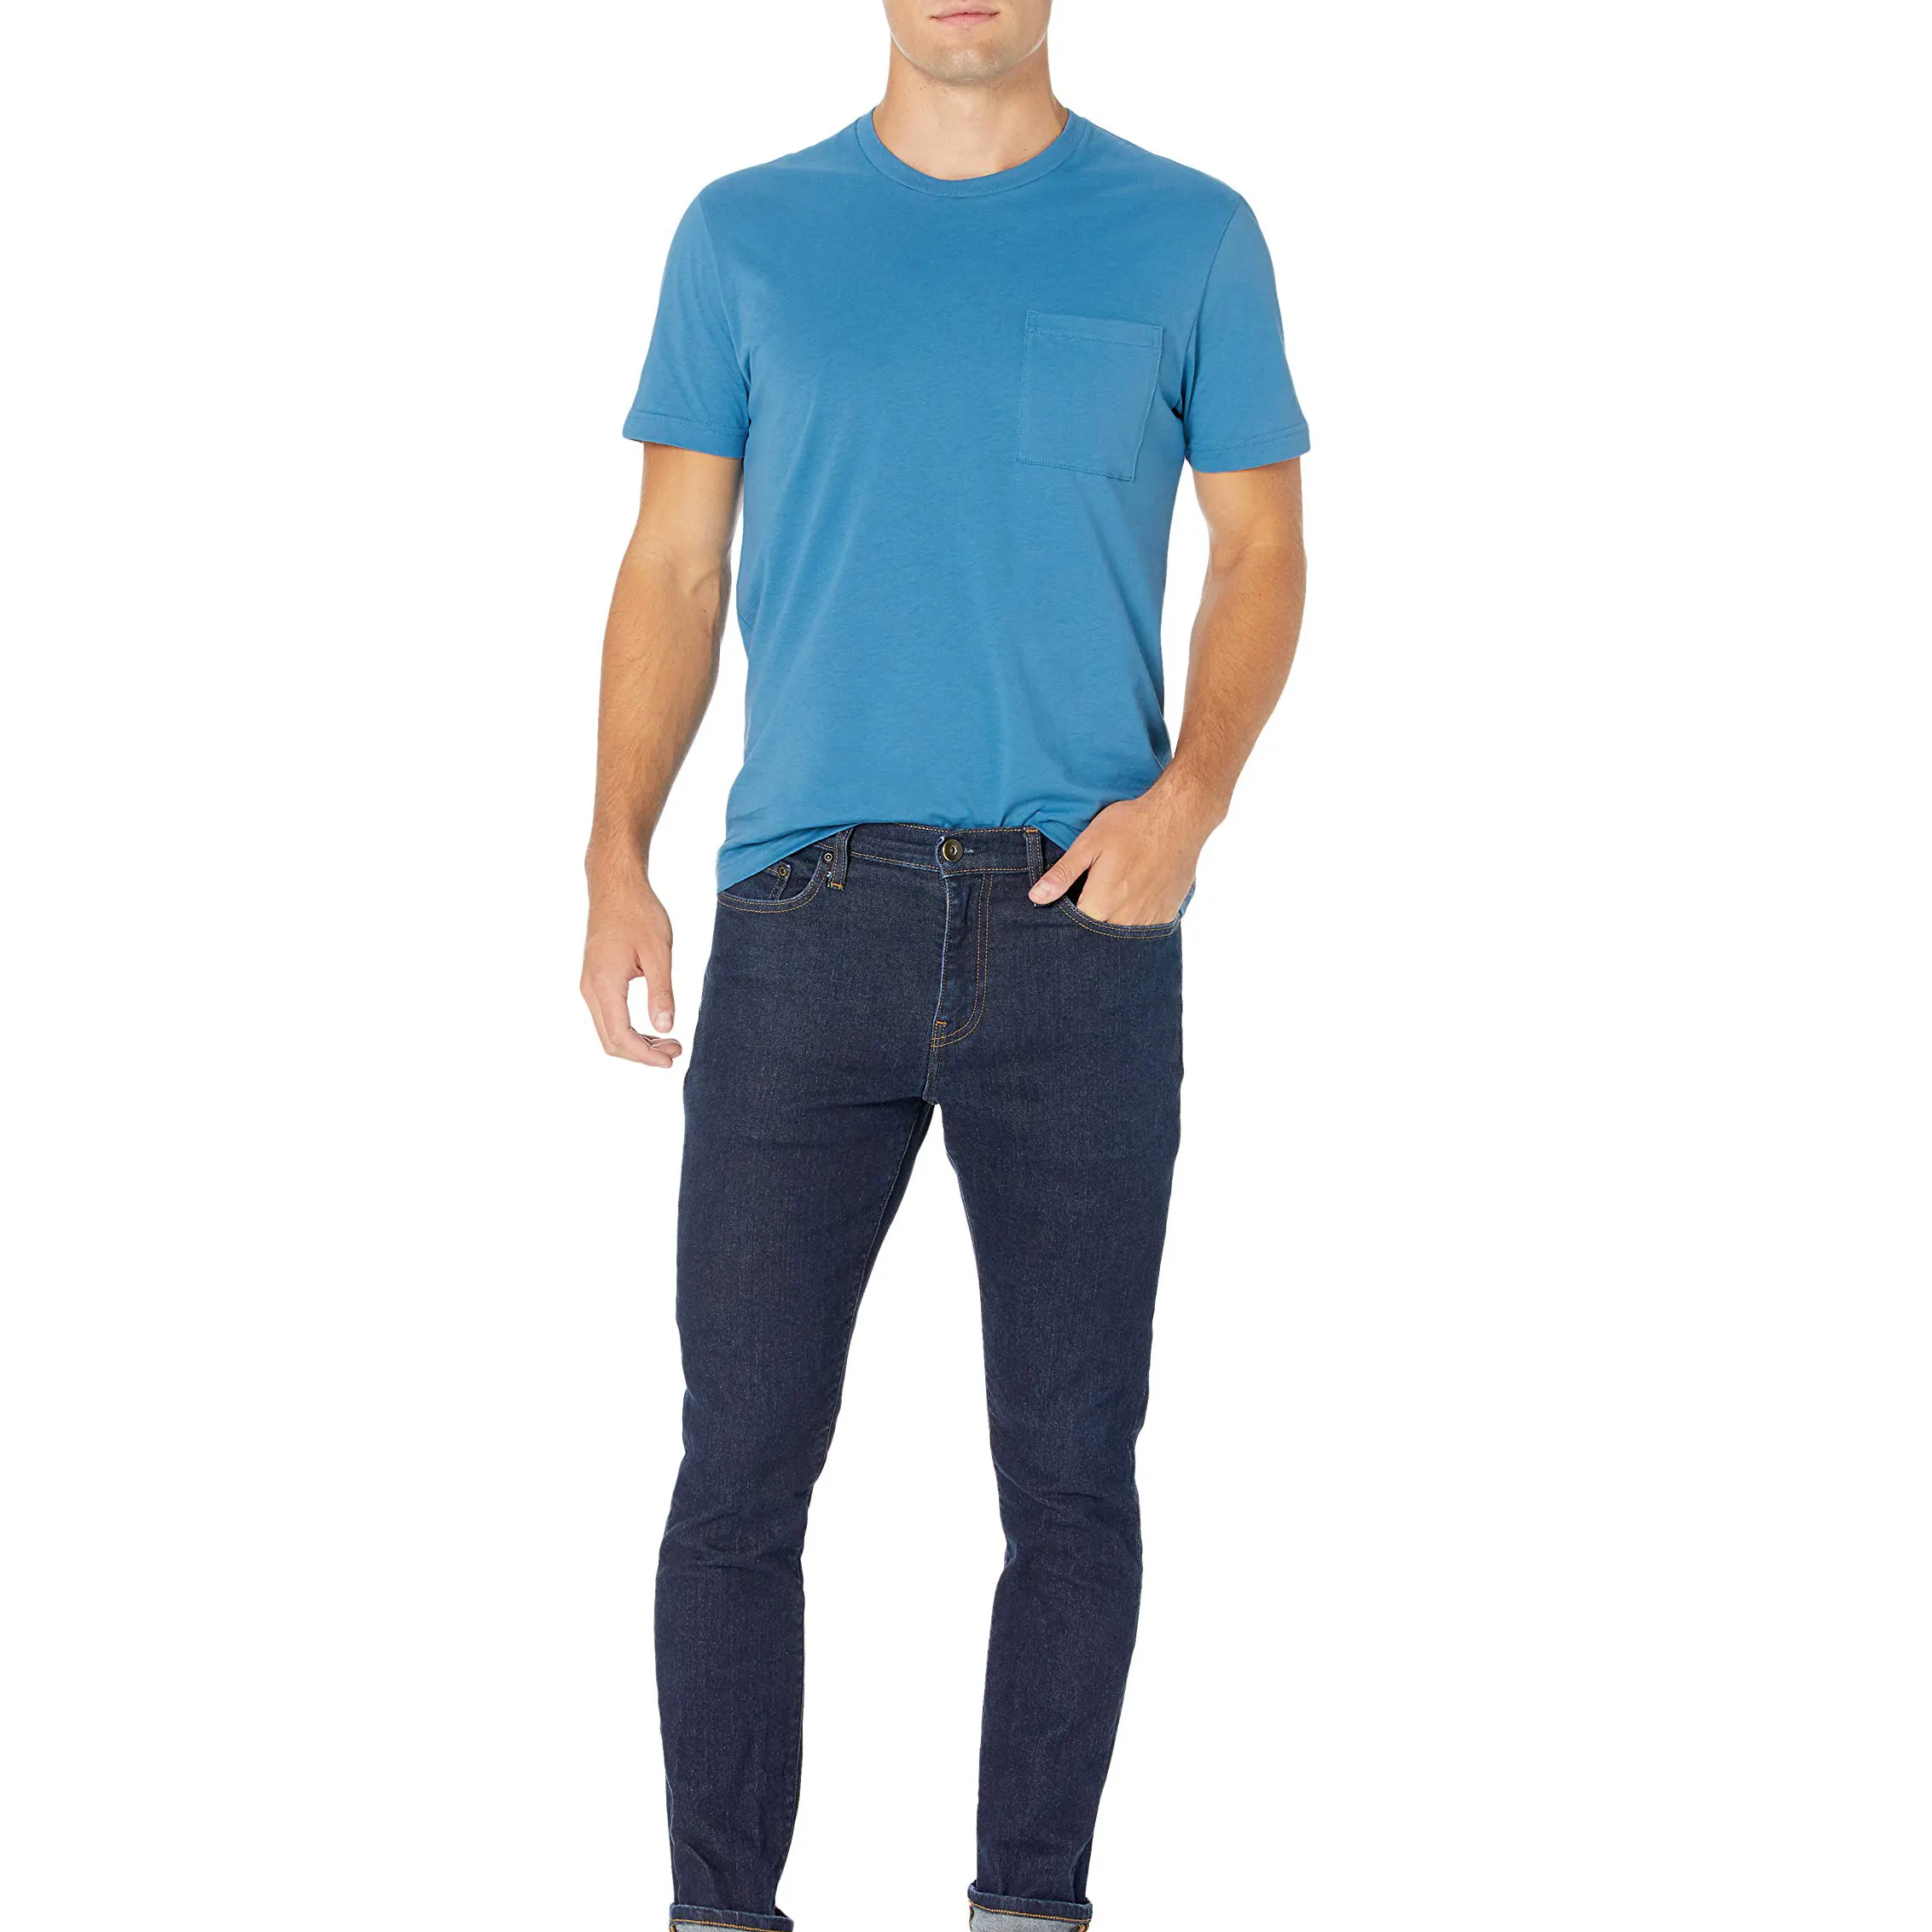 OEM Design Crew Neck Short Sleeve Quality T Shirt 100% Cotton Oversized T Shirt Short Sleeve For Men Customized Printing